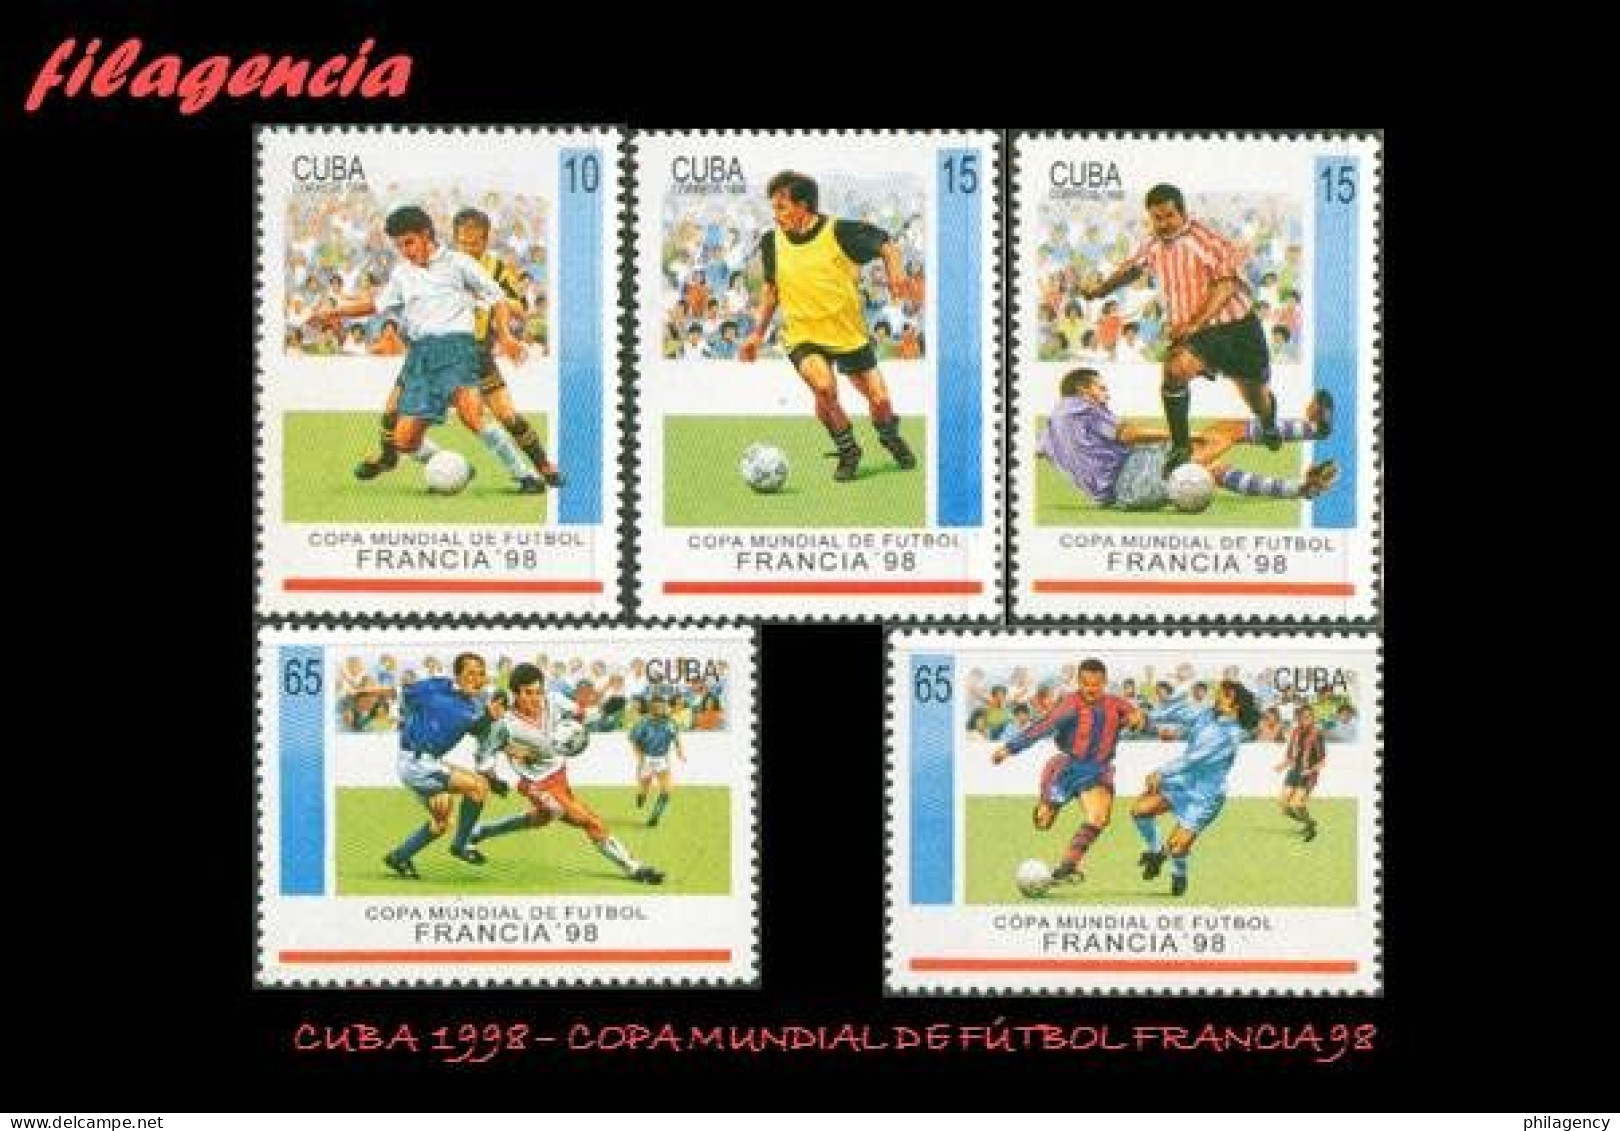 CUBA MINT. 1998-03 COPA MUNDIAL DE FÚTBOL FRANCIA 98 - Unused Stamps